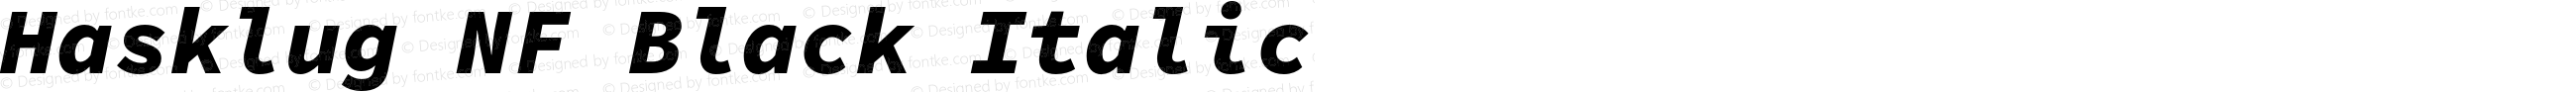 Hasklug Black Italic Nerd Font Complete Windows Compatible